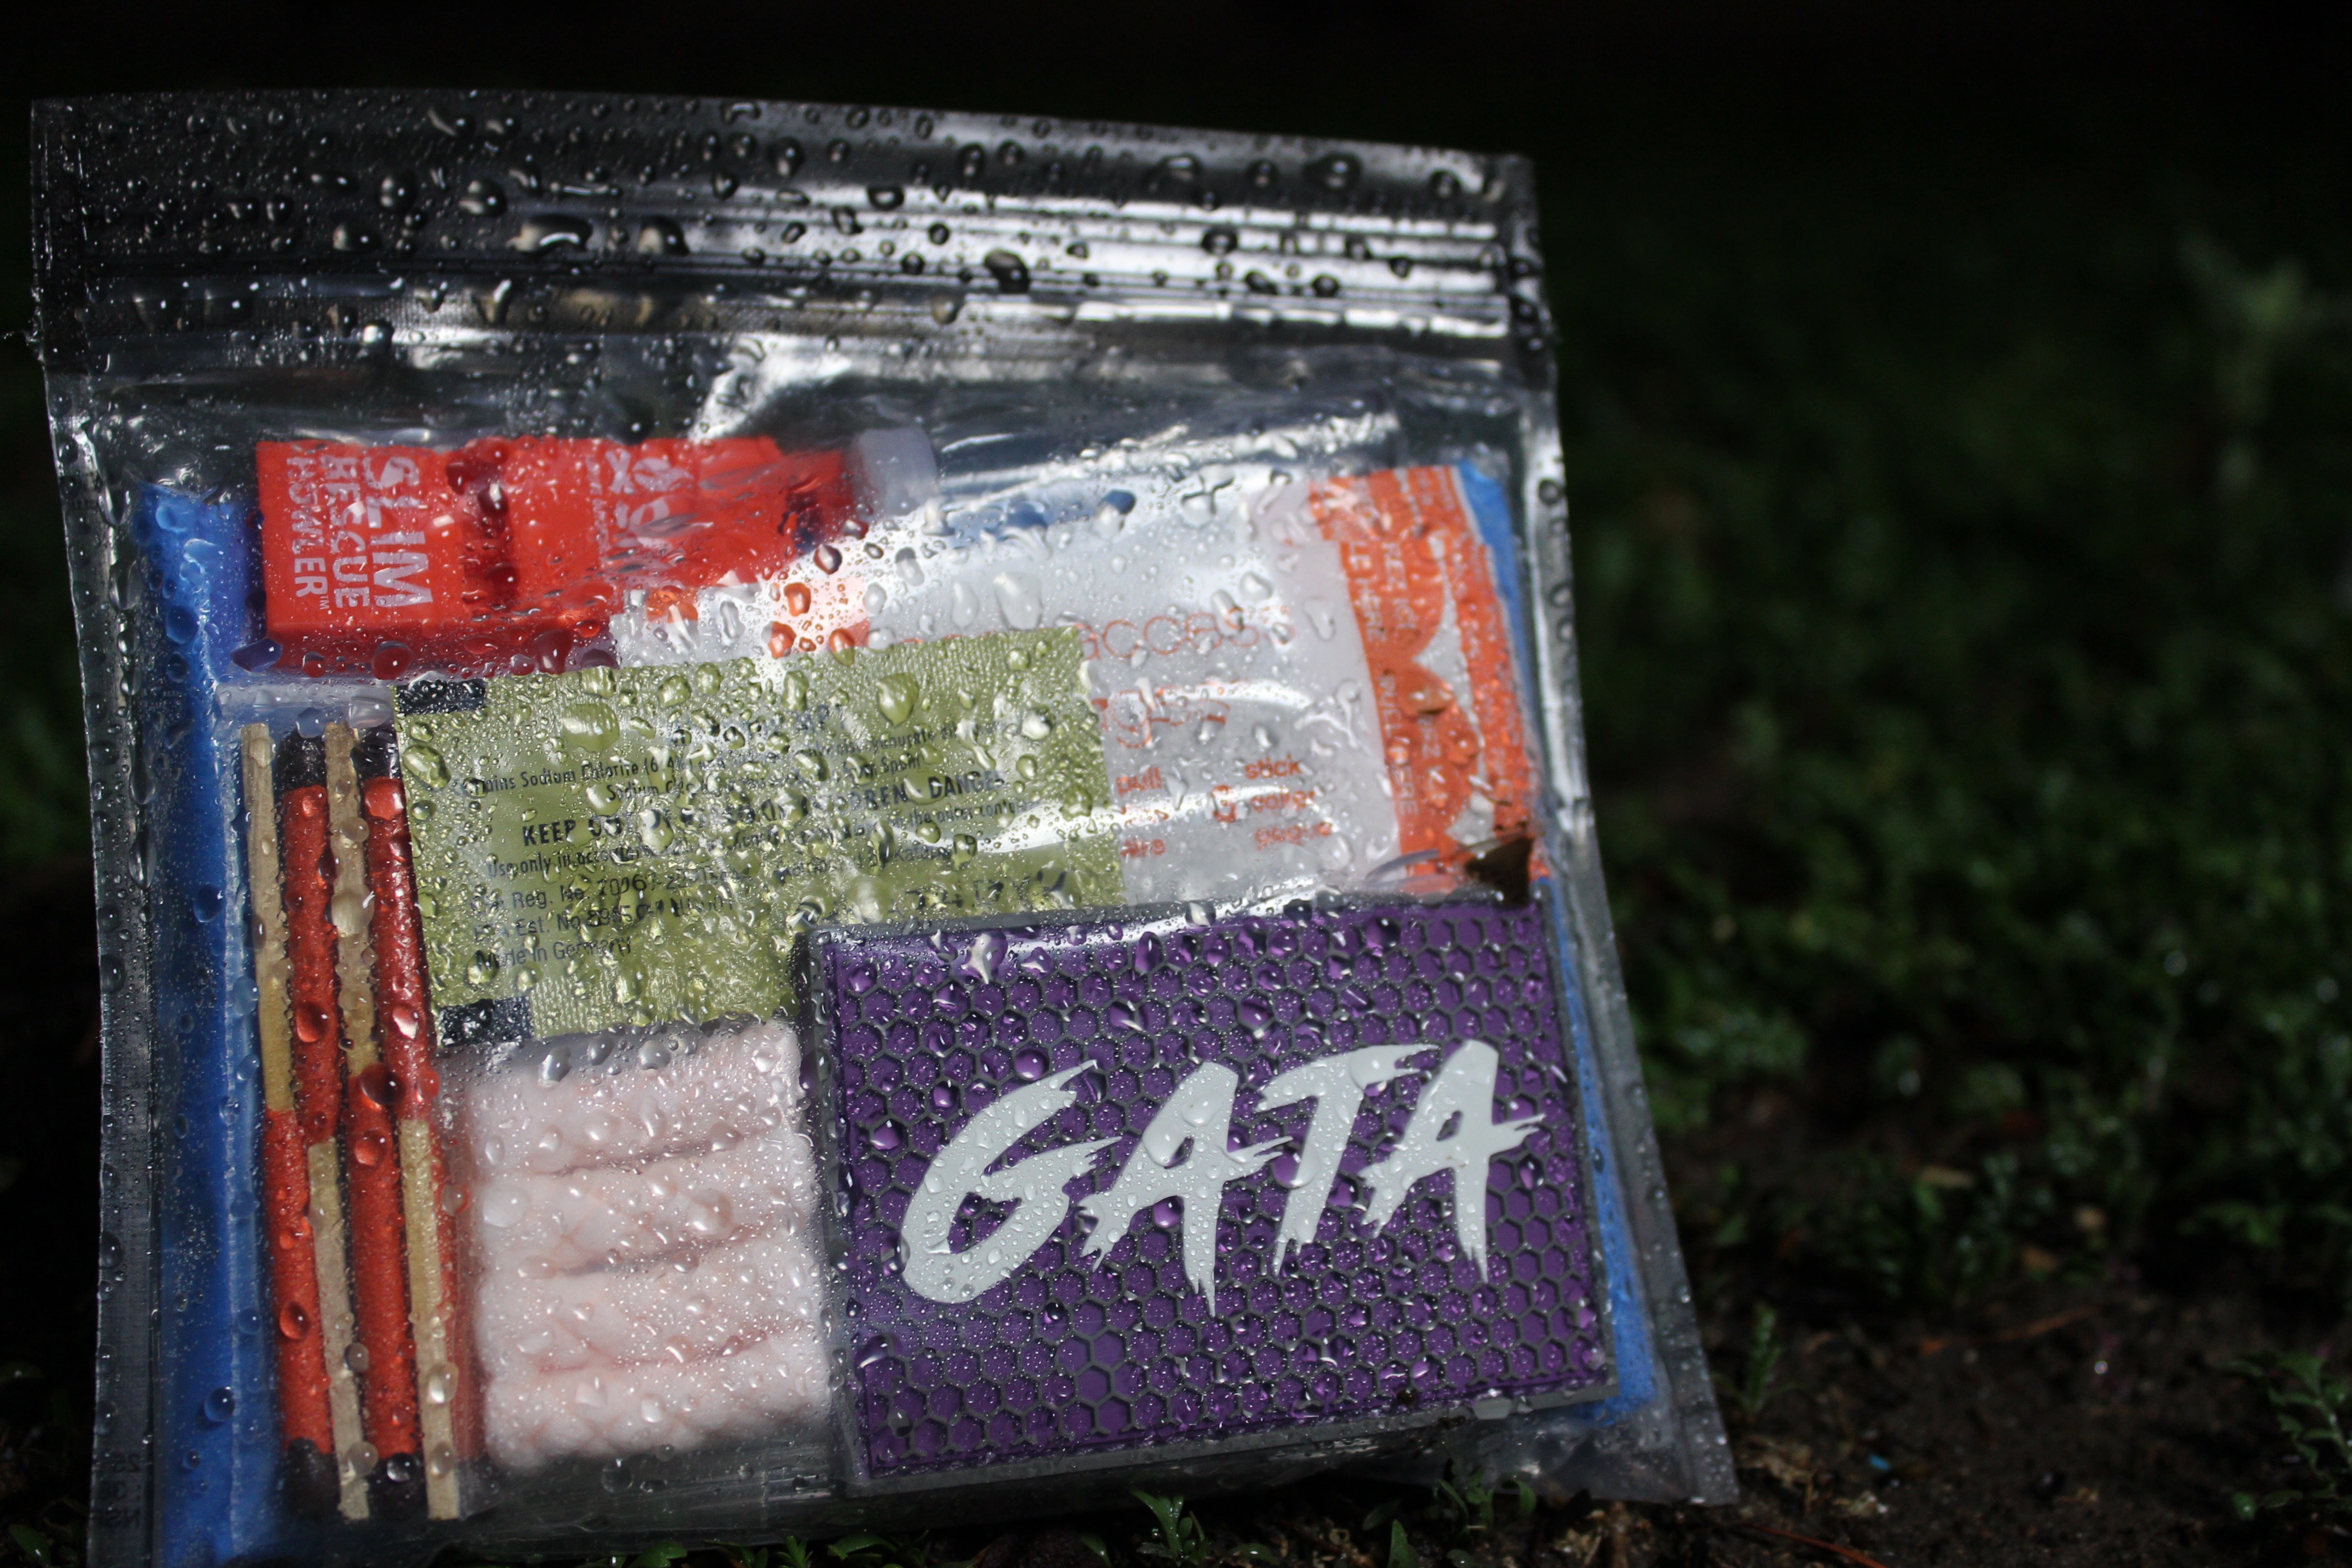 gata-collection-image